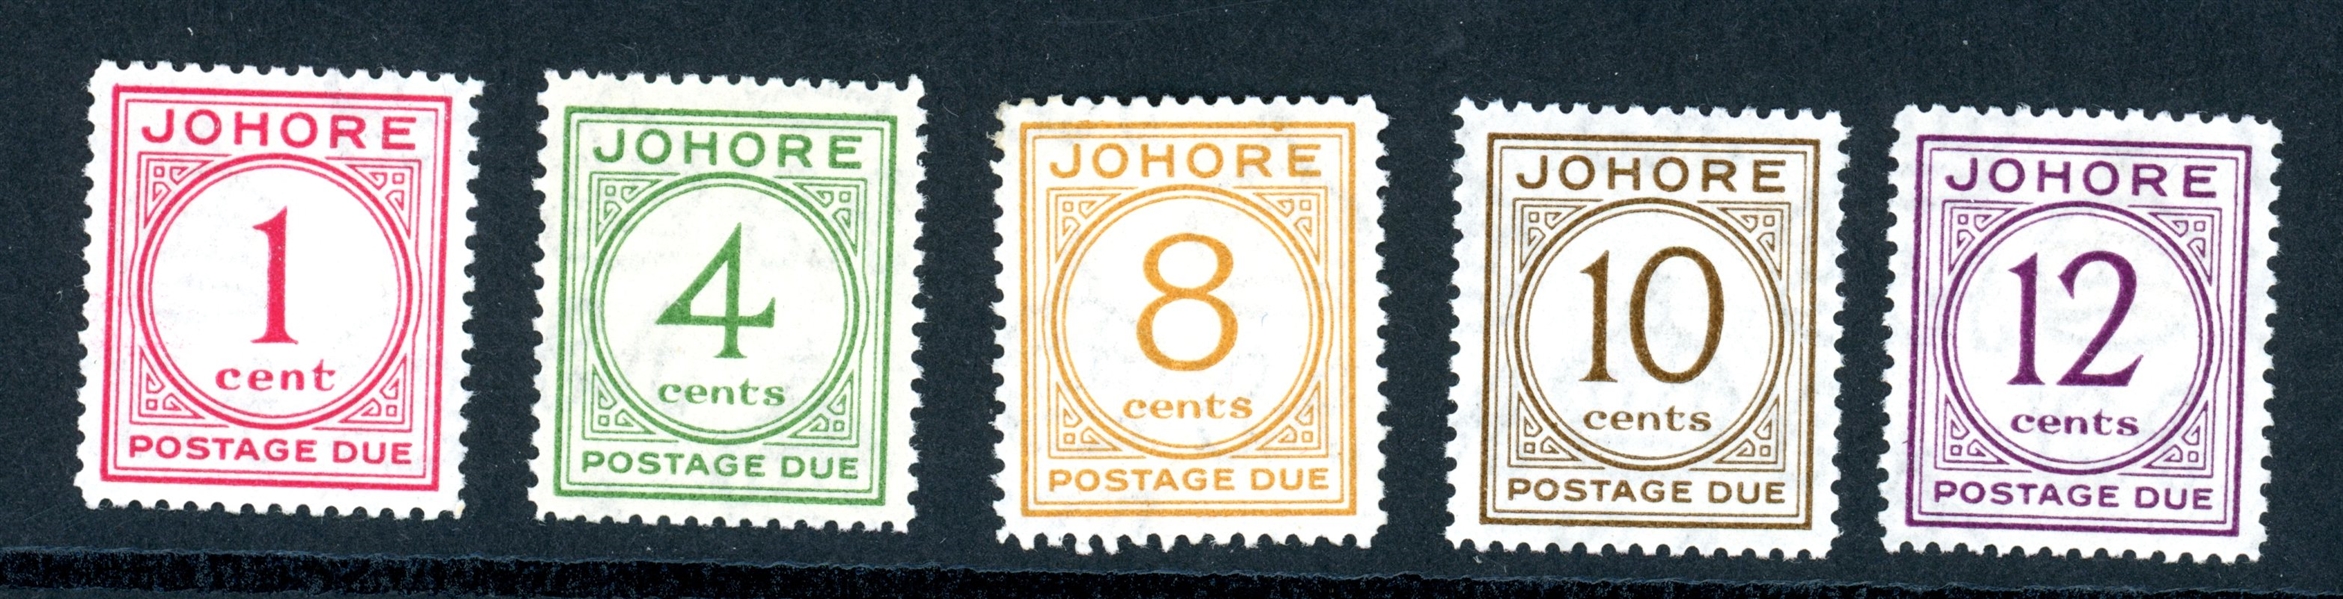 Malaya-Johore Scott J1-J5 MH Complete Set, 1938 Postage Dues (SCV $227.50)